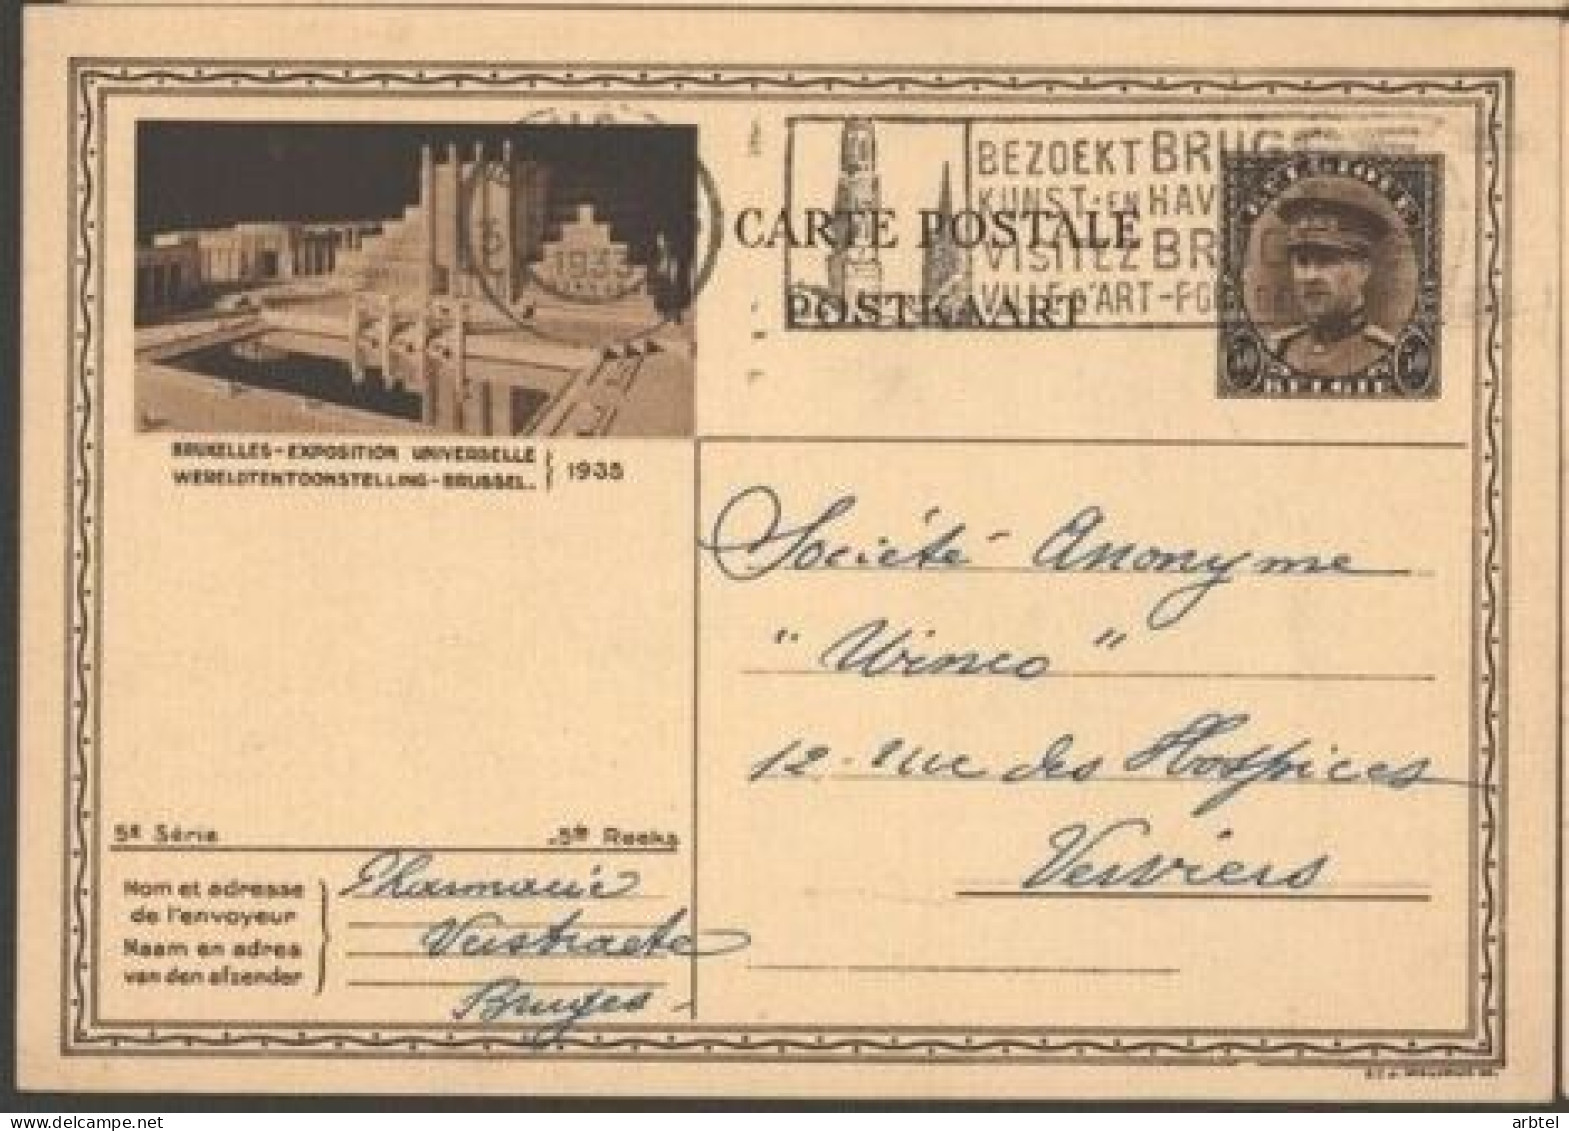 BELGICA ENTERO POSTAL EXPOSITION BRUXELLES 1935 MAT BRUGEE - 1935 – Brussels (Belgium)